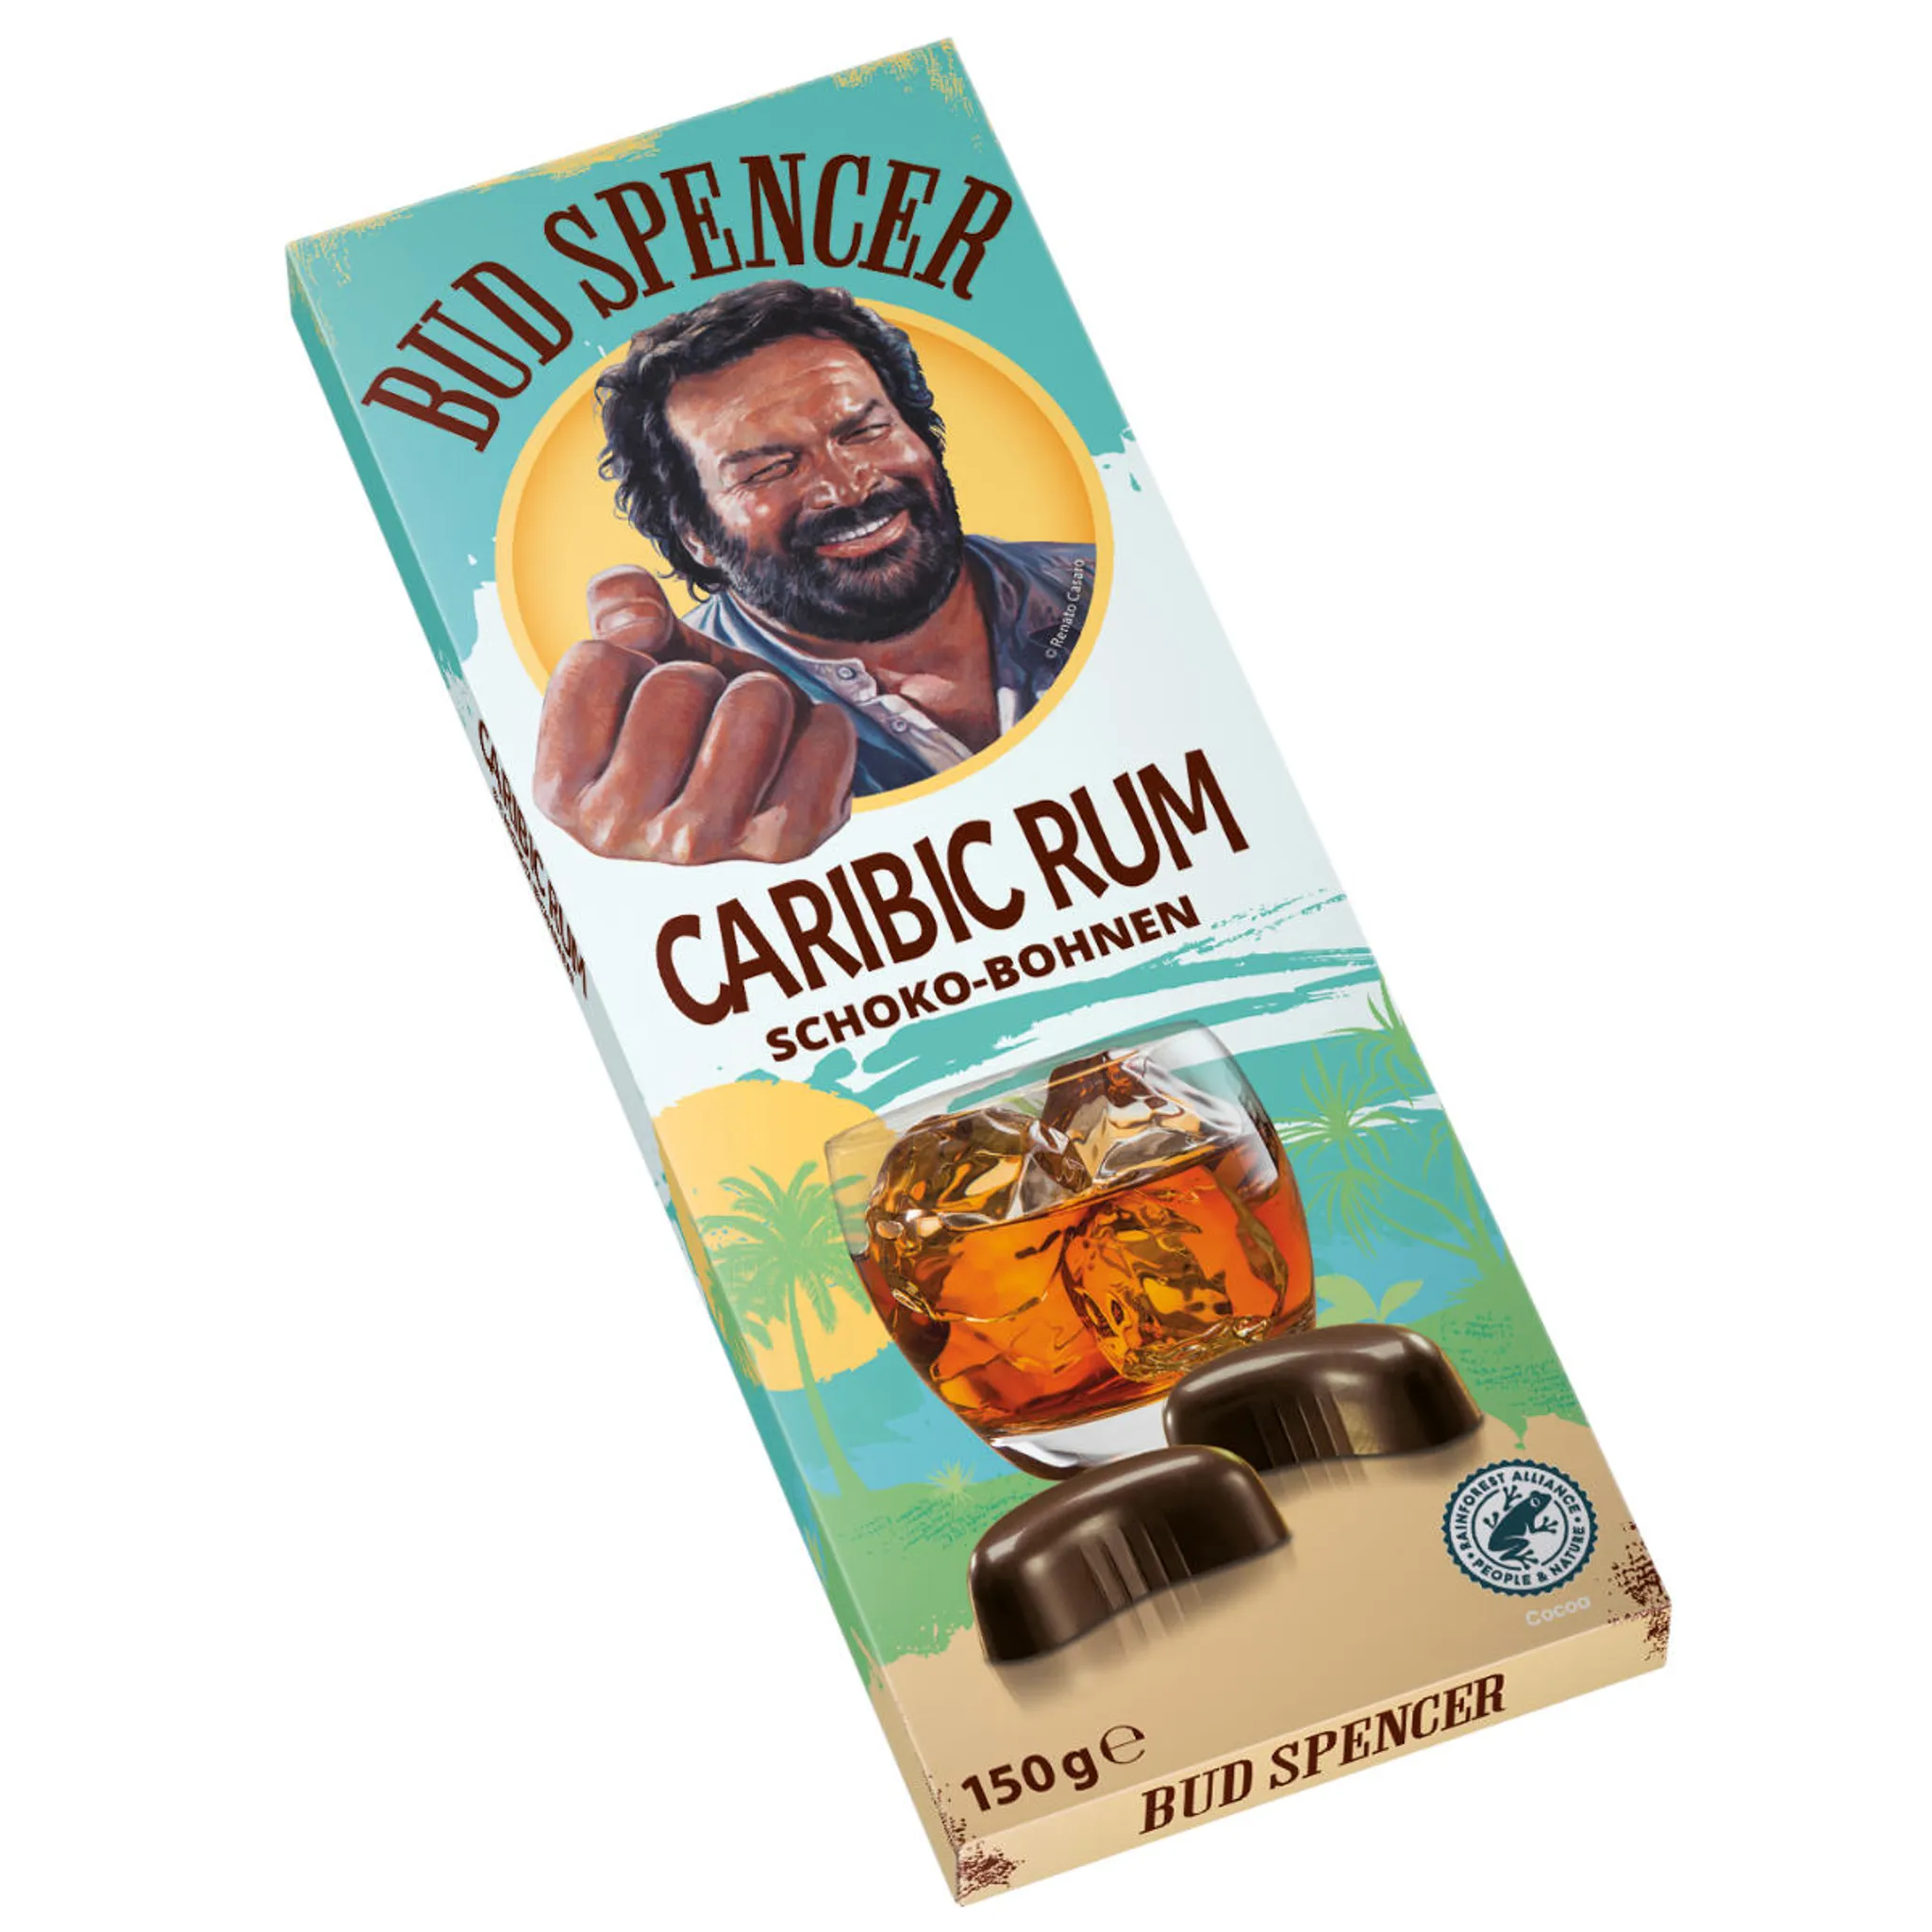 Bud Spencer - Caribic Rum Schoko-Bohnen